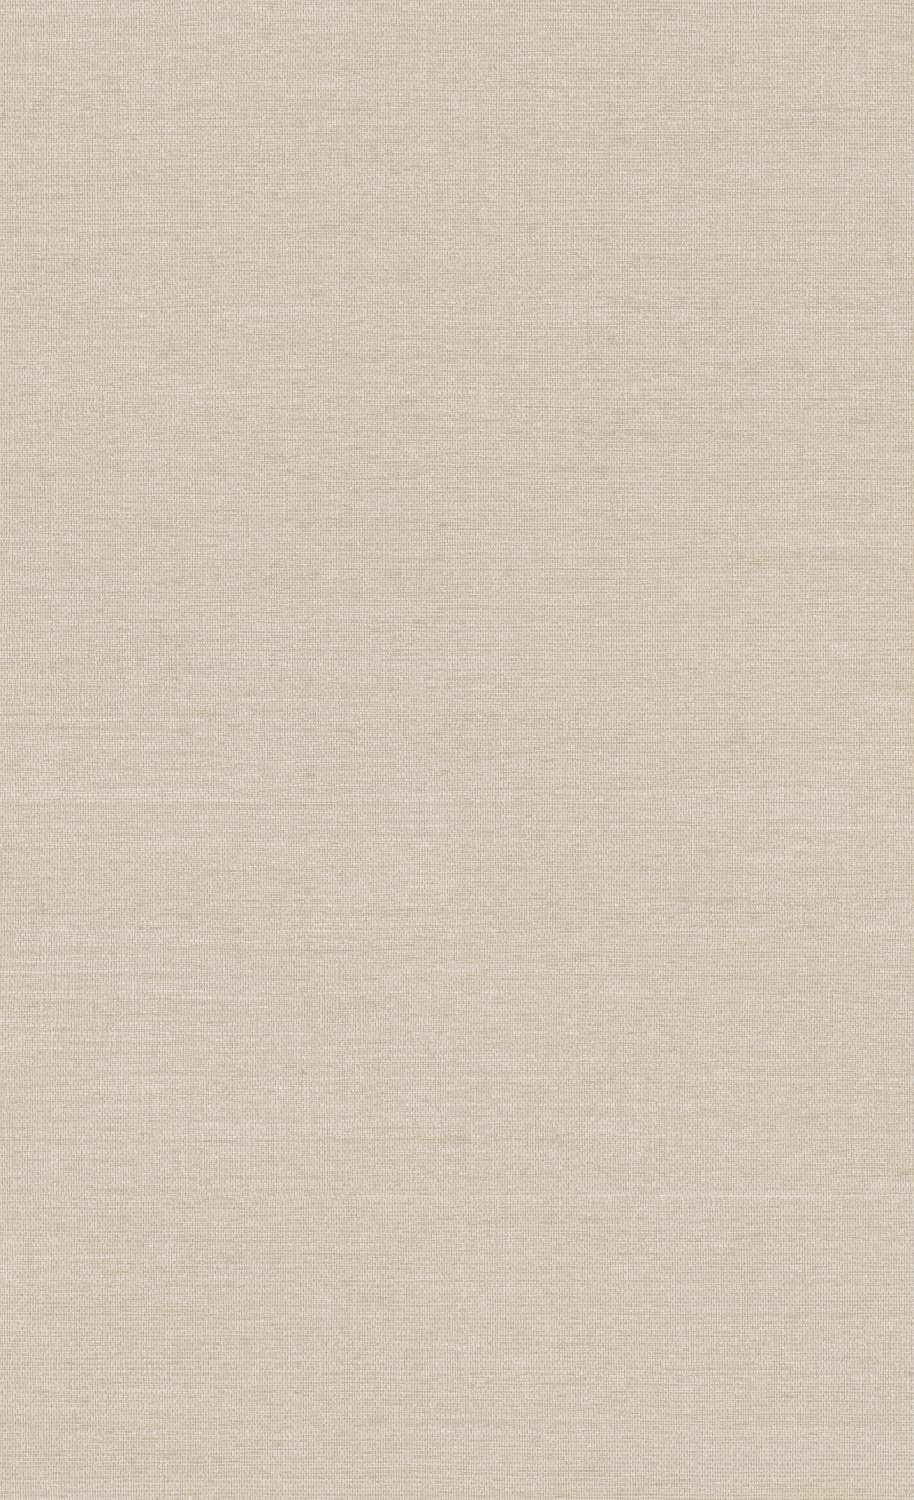 Neutral Mix Beige White Cream Plain Textured Thick Vinyl Wallpaper | eBay